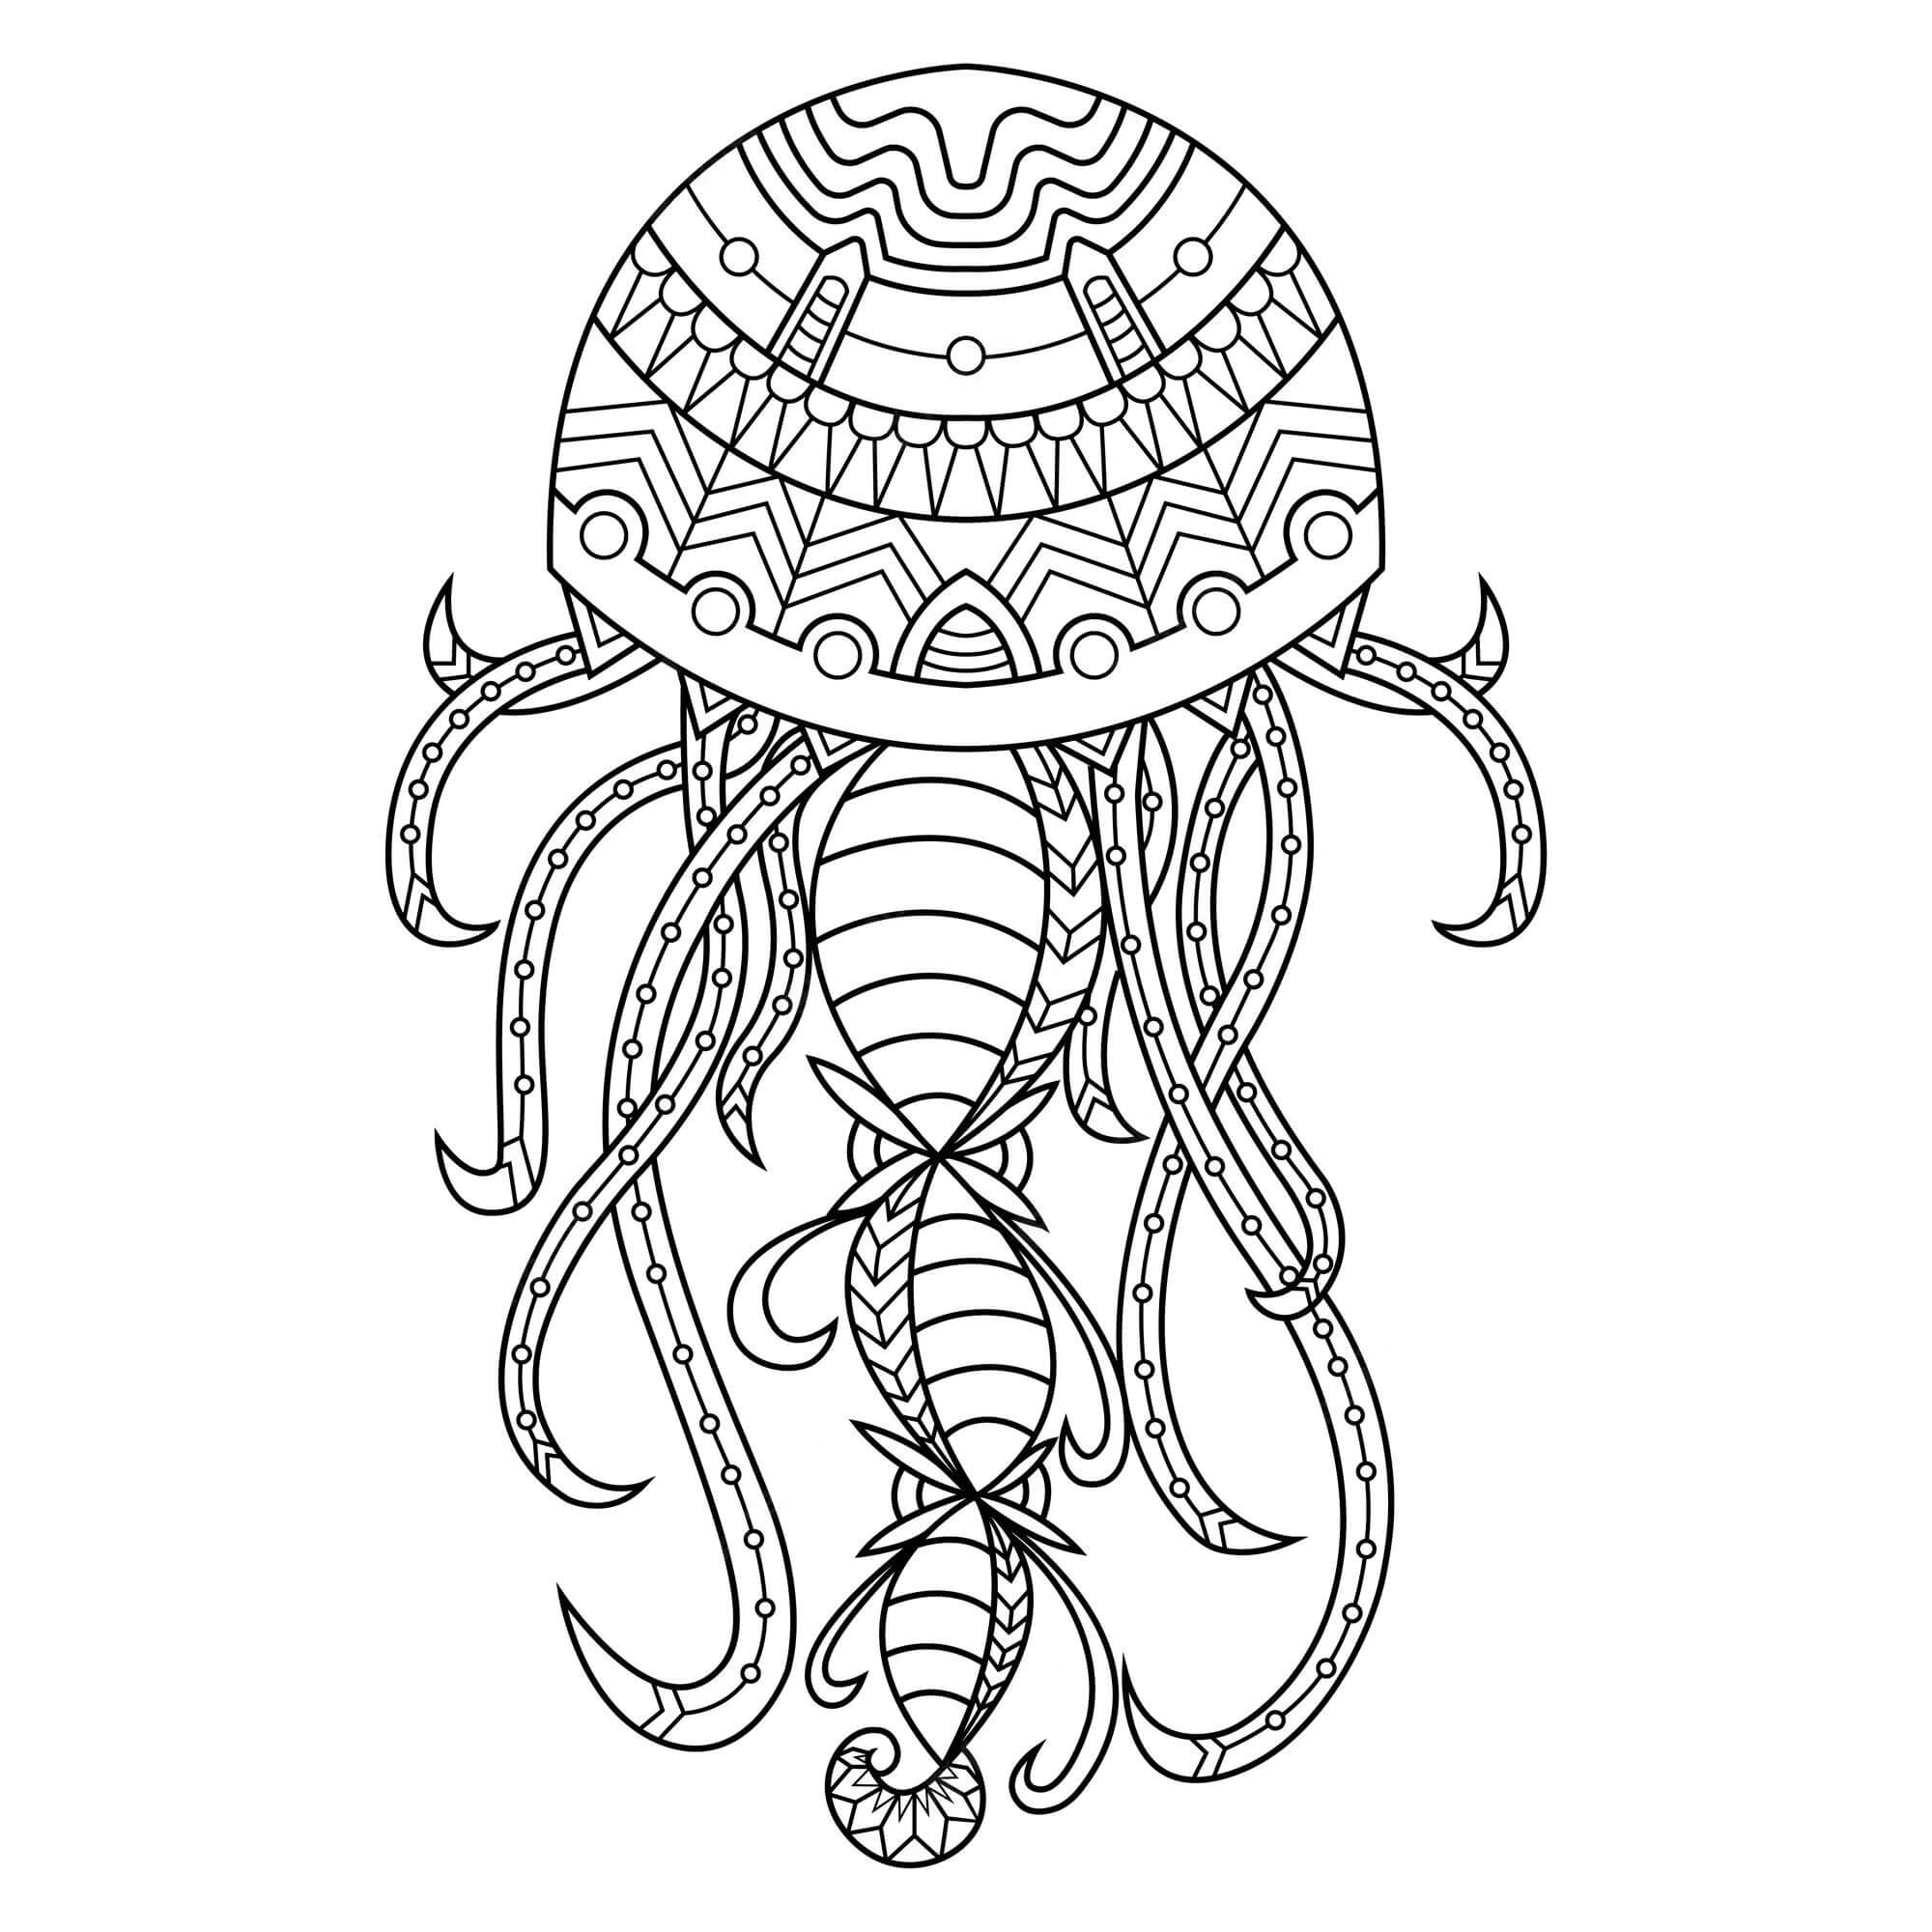 Mandala Jellyfish Coloring Page - Sheet 3 Mandalas